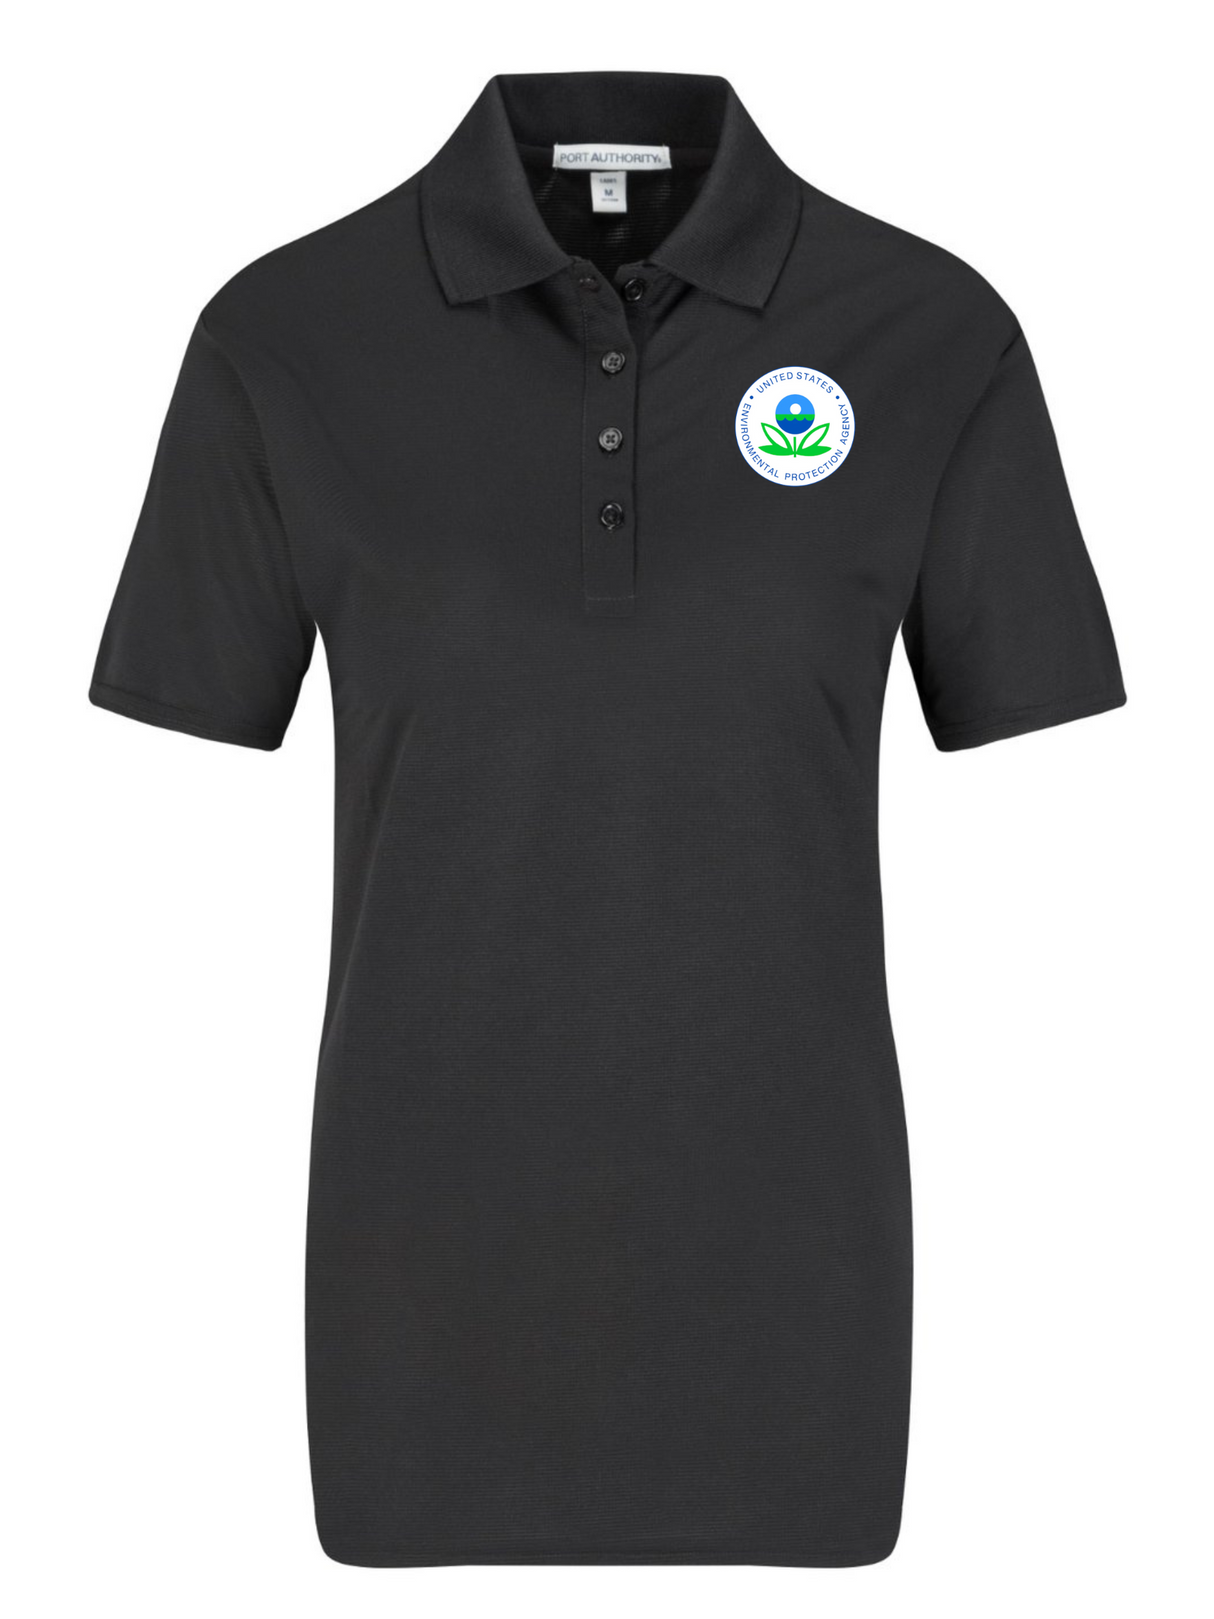 EPA Environmental Protection Agency Polo Shirt - Women's Short Sleeve